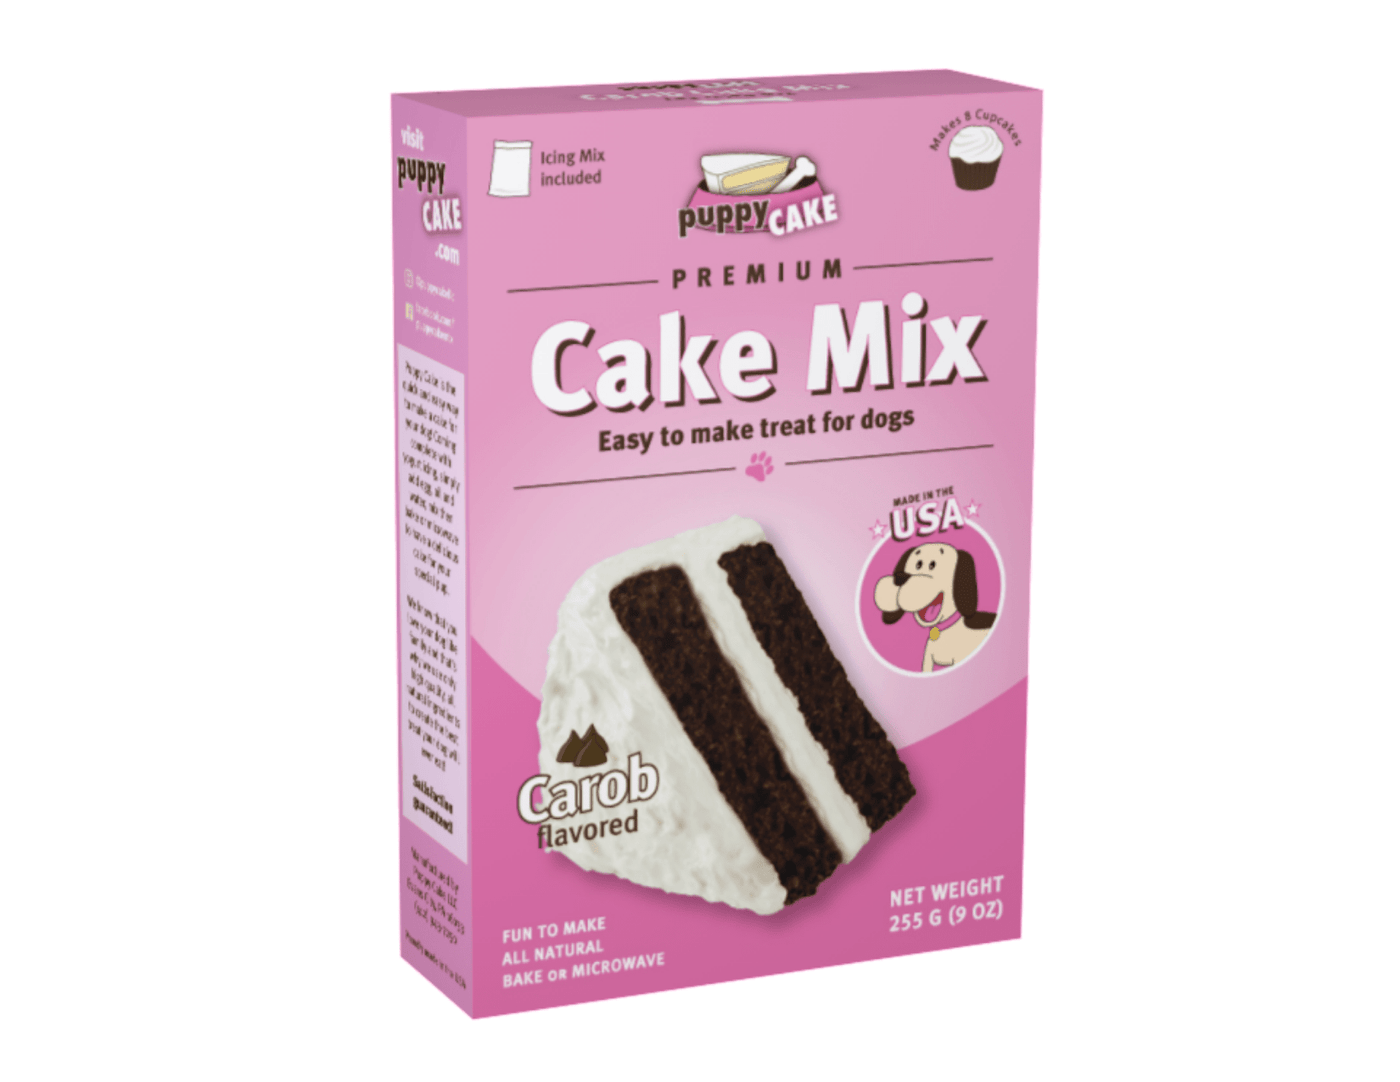 Puppy Cake Mix - Carob Flavored - PetToba-Puppy Cake